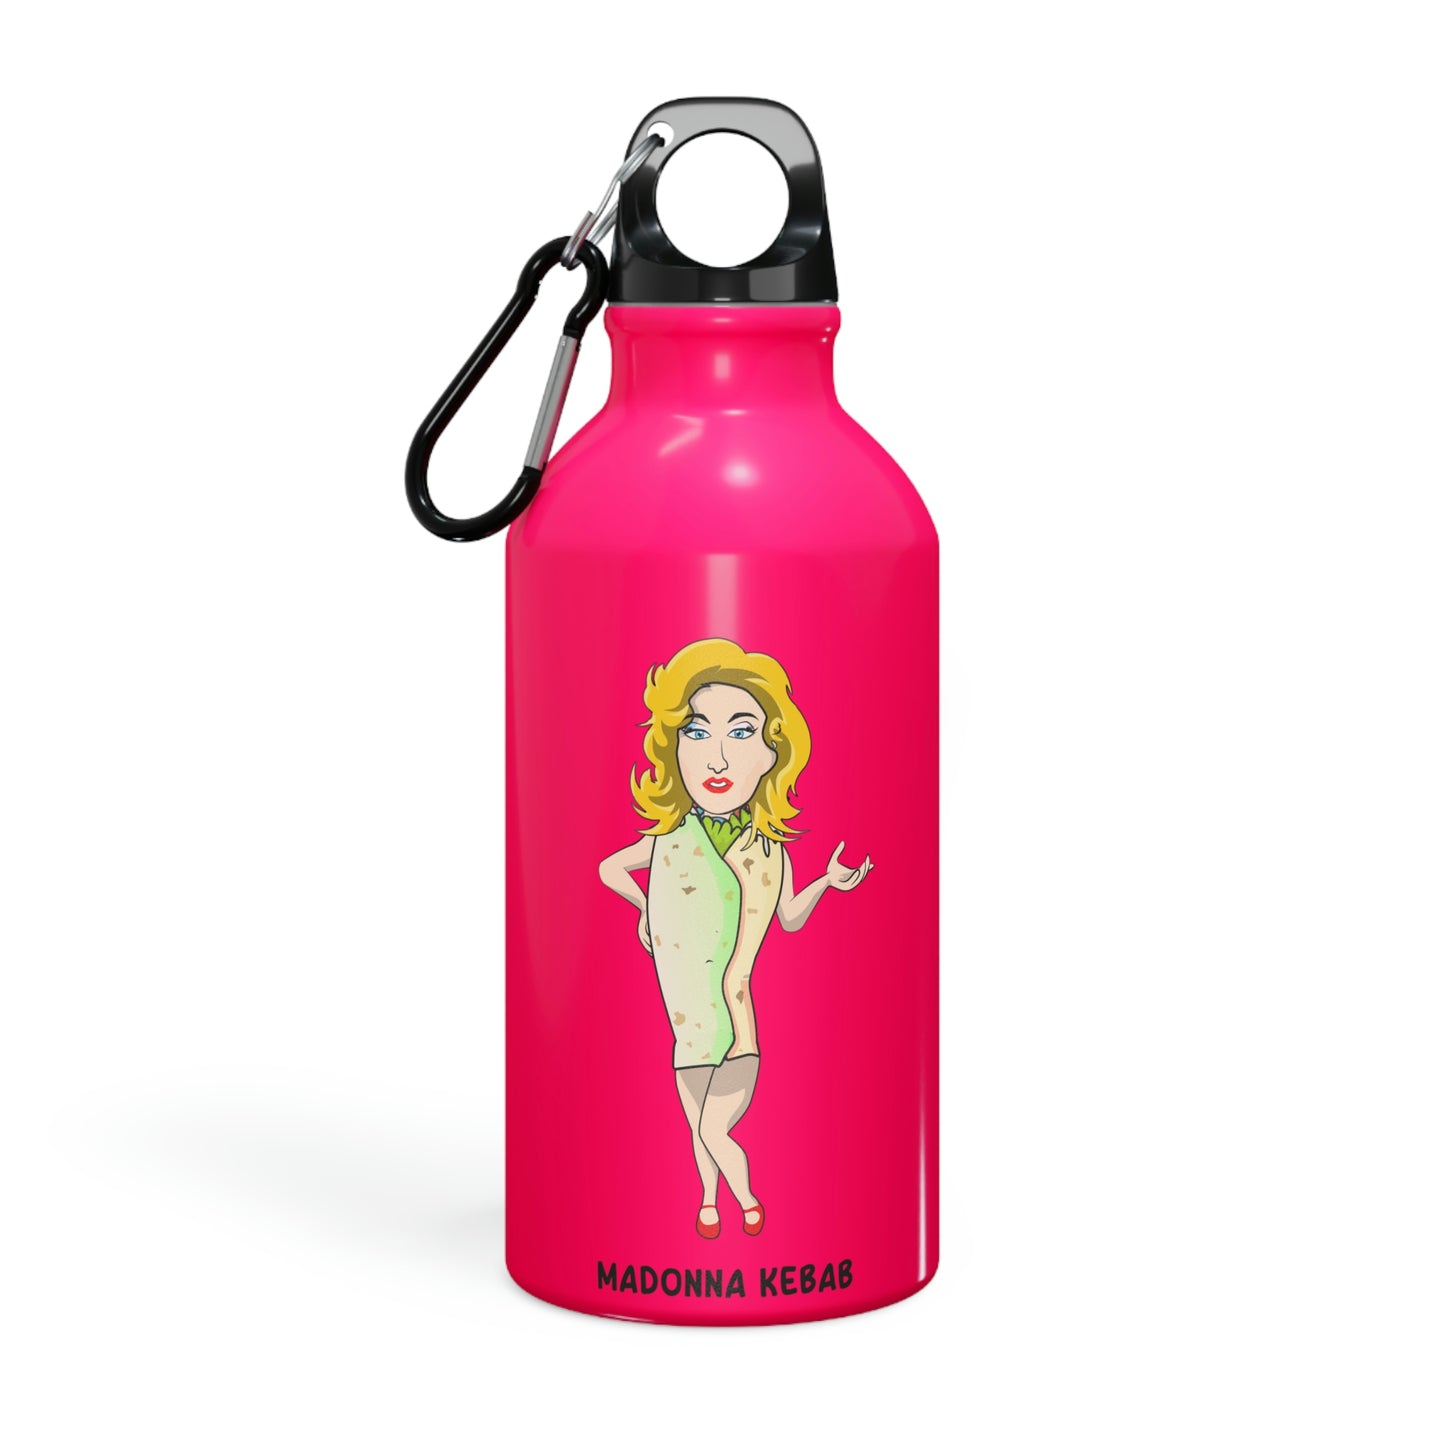 Madonna Kebab Sports Bottle